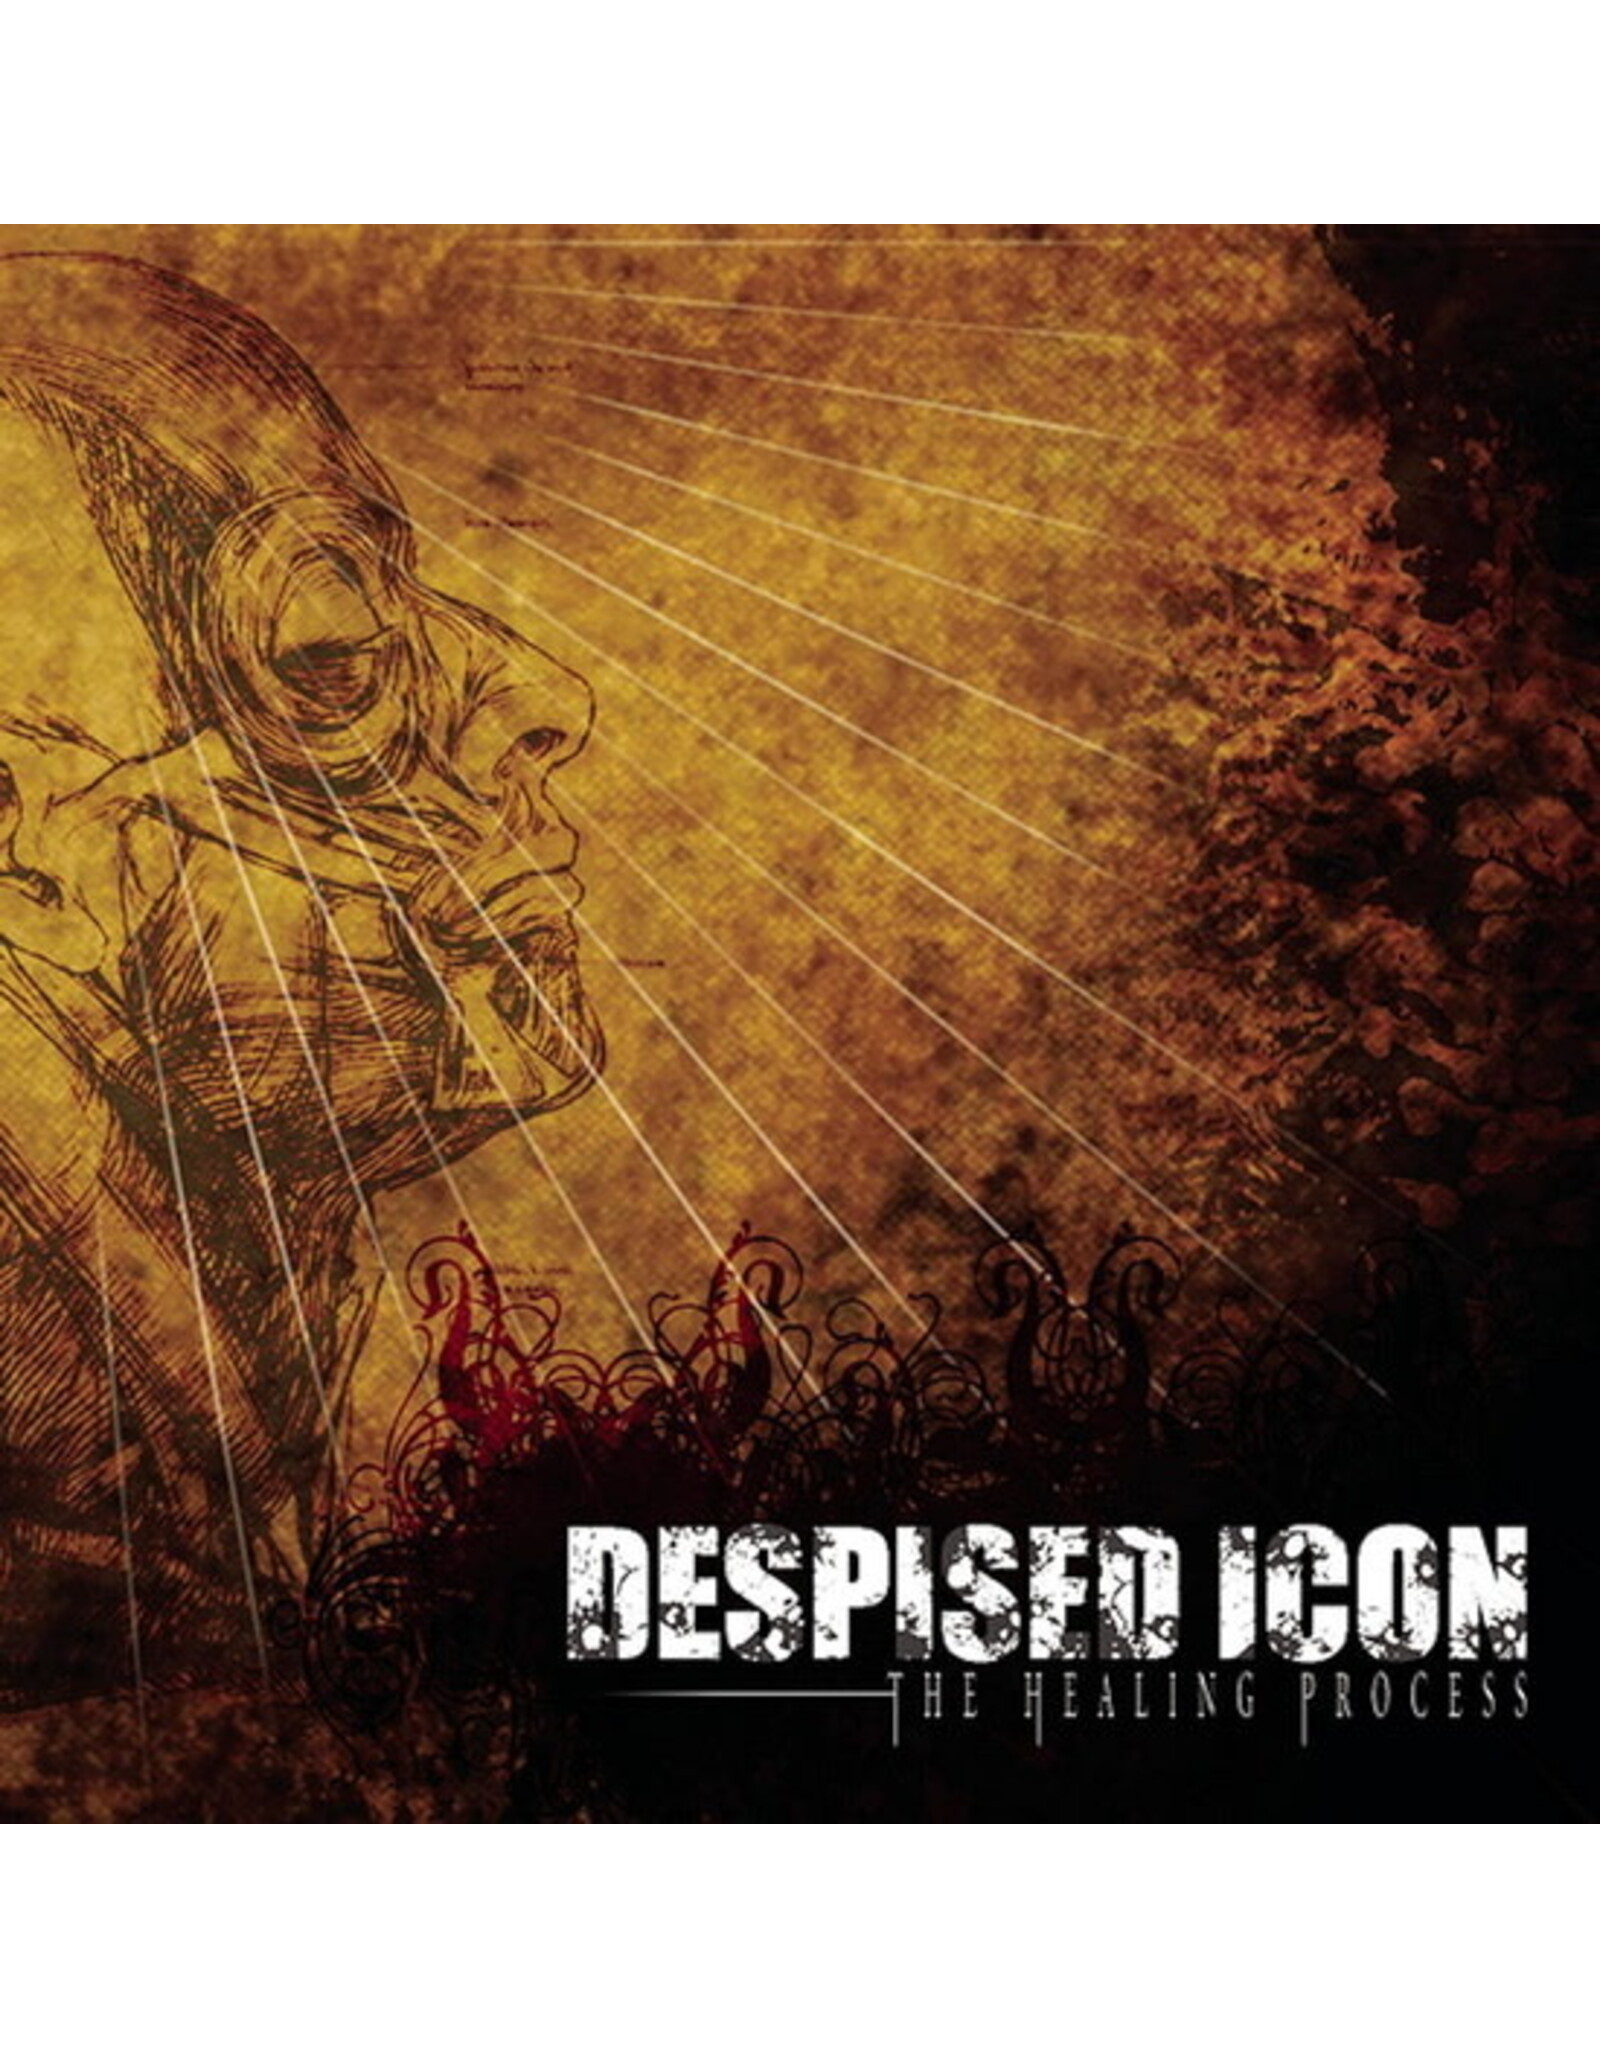 Despised Icon - The Healing Process (Clear dark amber/Alternate mix/Bonus CD) Ltd reissue LP